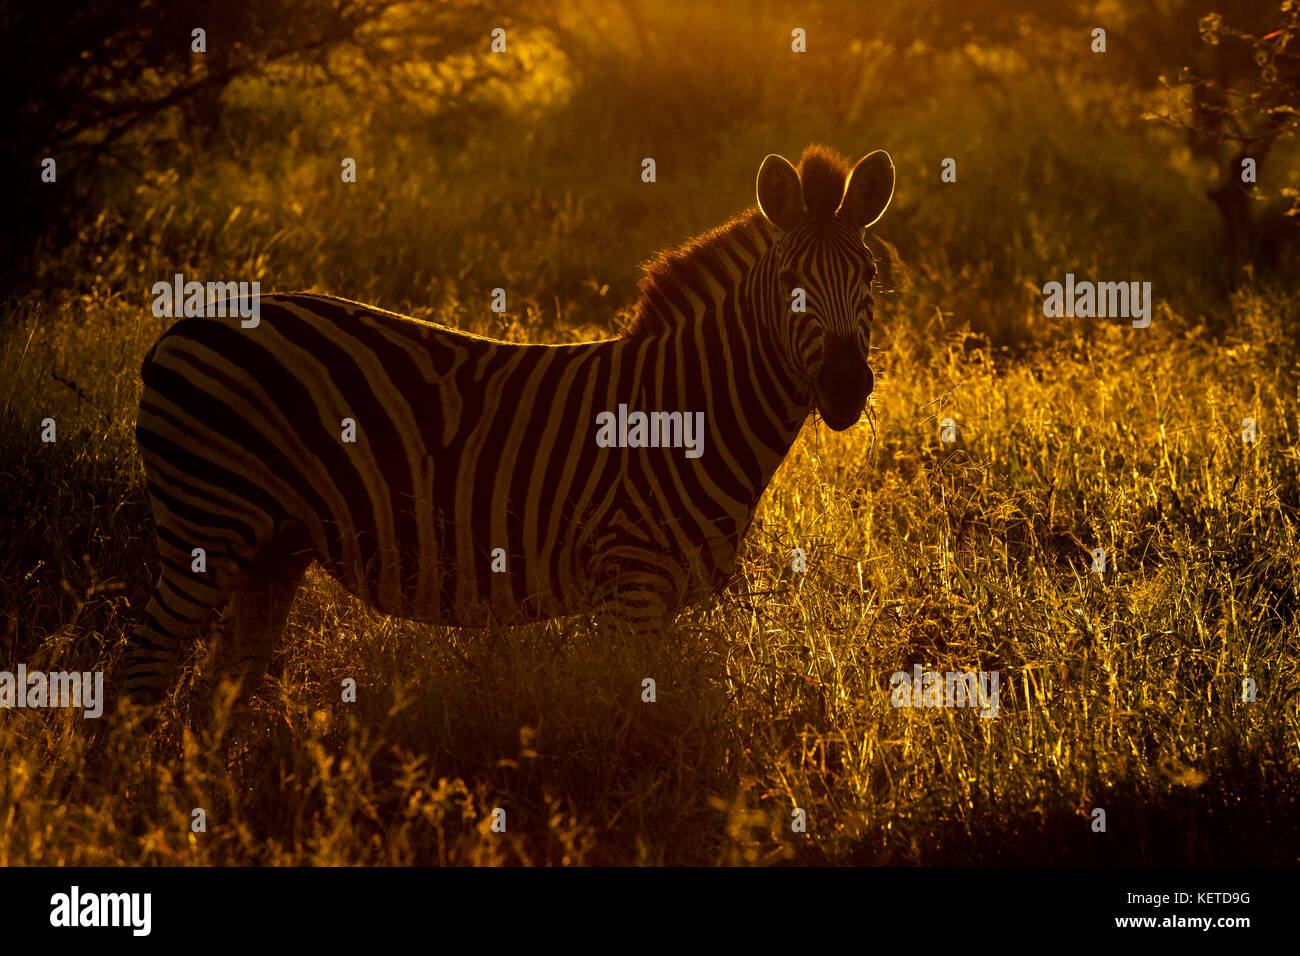 Plains zebra (Equus quagga), looking at camera, backlit on savanna during sunrise, Kruger National Park, South Africa Stock Photo